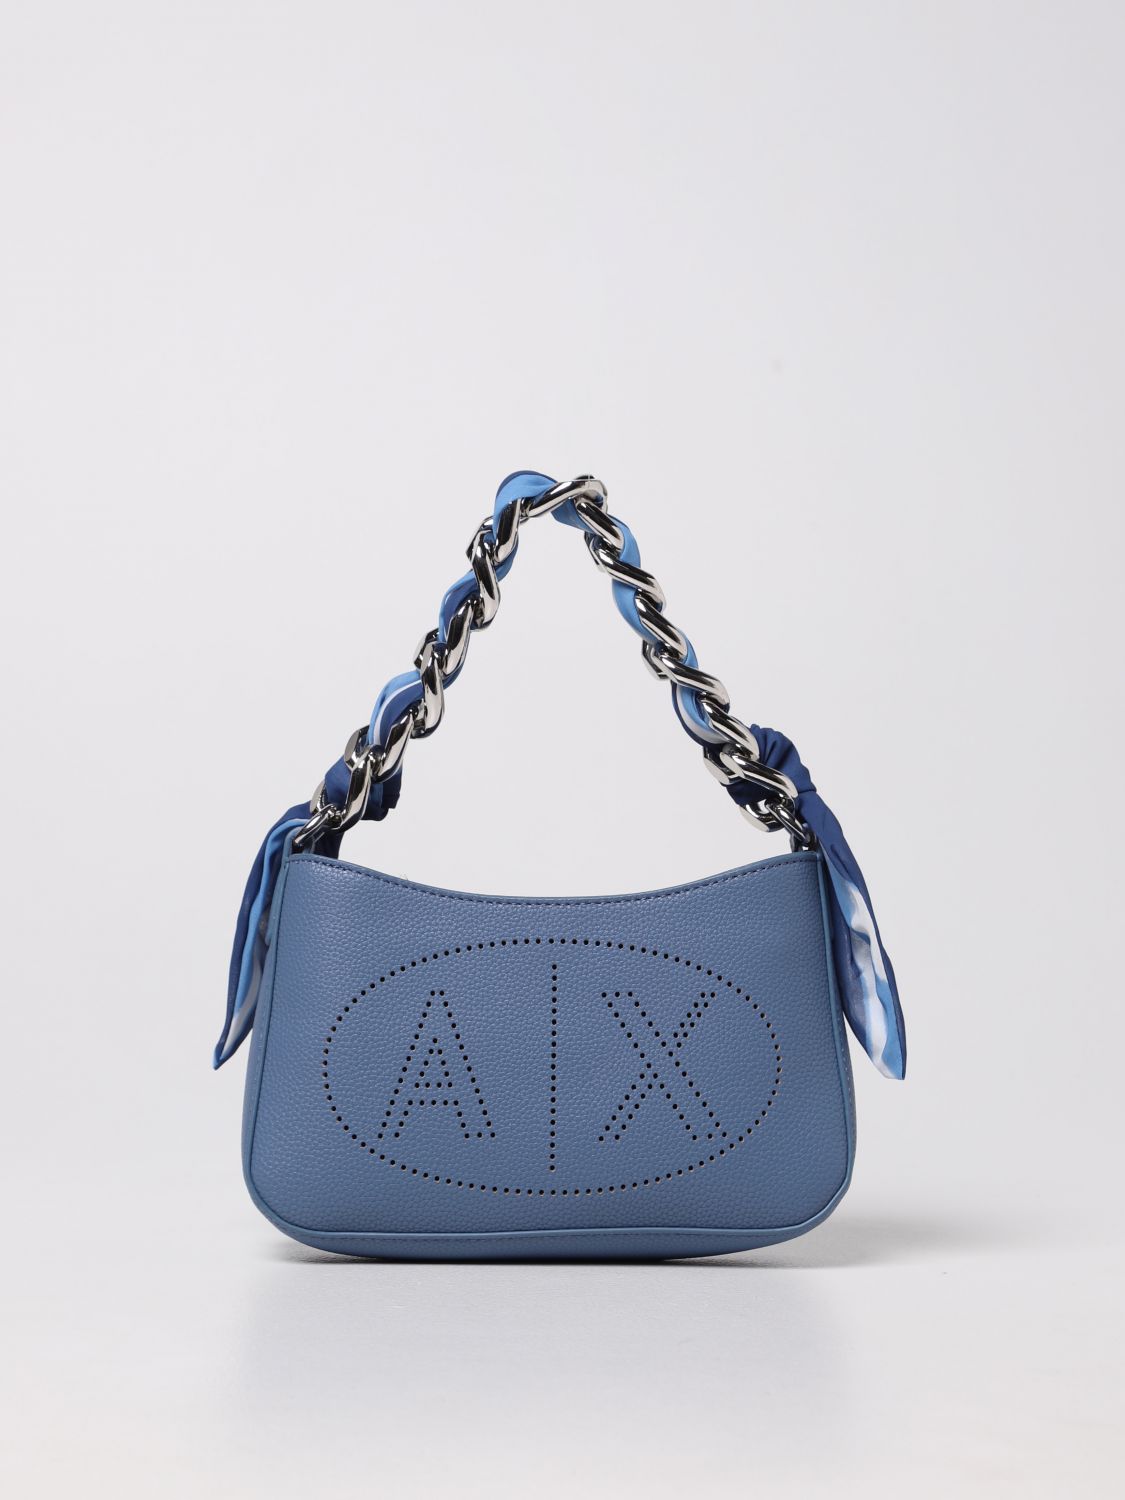 ARMANI EXCHANGE: tote bag in textured synthetic leather - Denim | Armani  Exchange shoulder bag 9427982R704 online on 